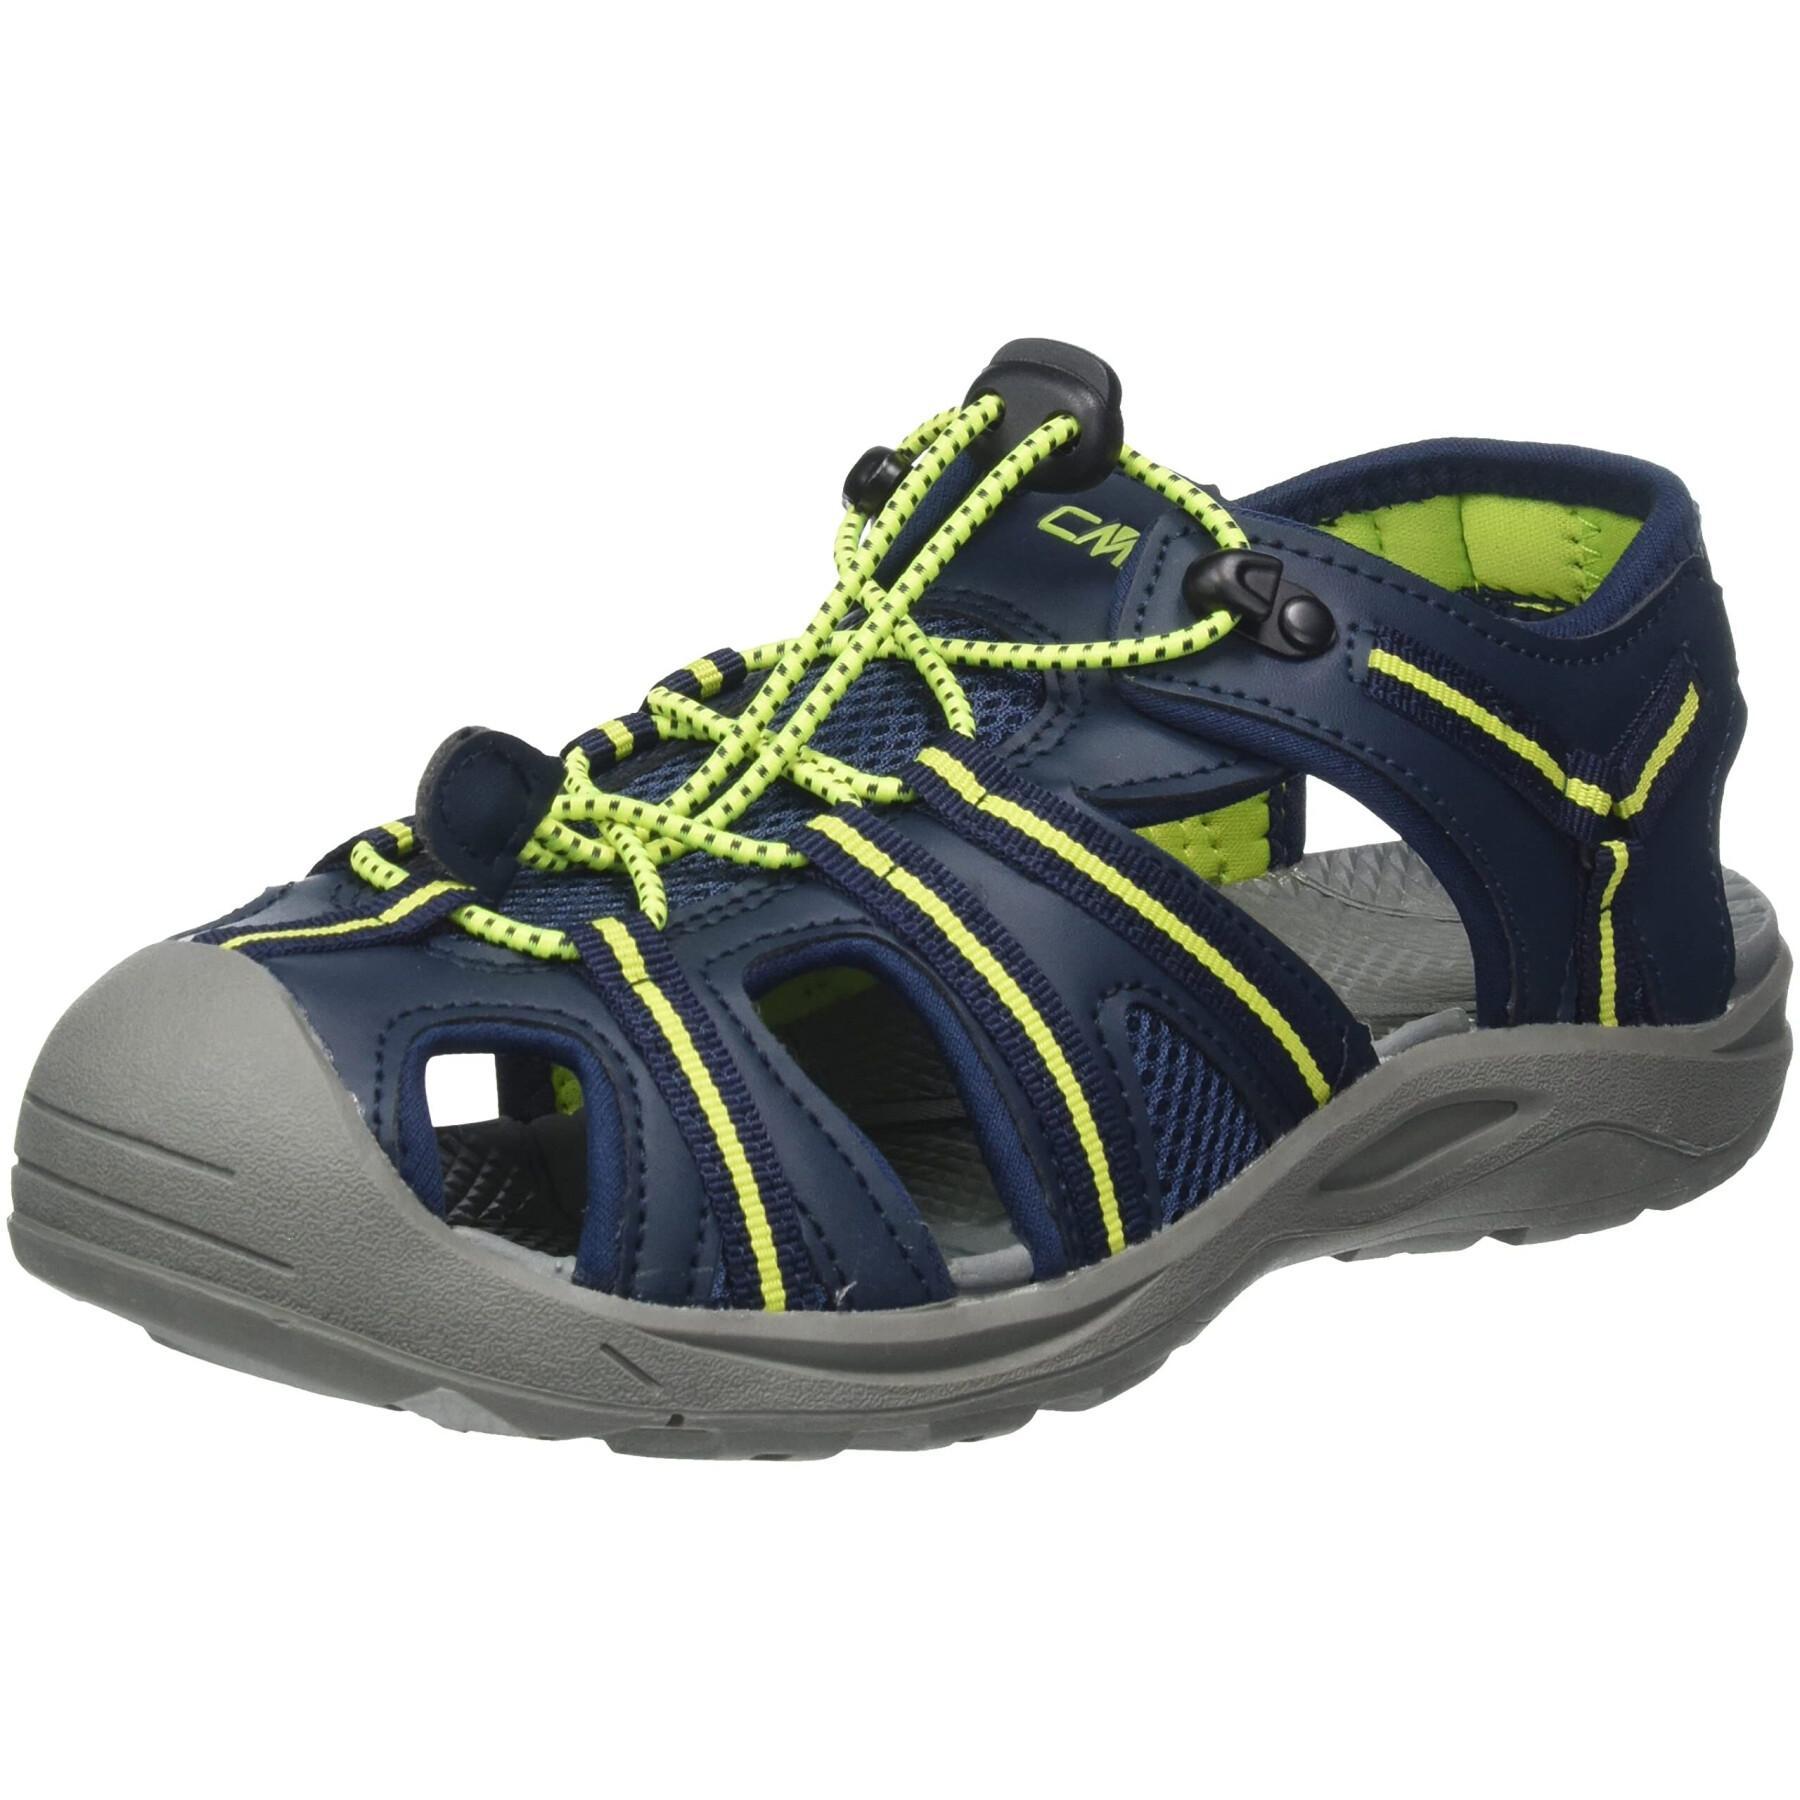 Children's sandals CMP Aquari 2.0 - Hiking Sandals - Hiking Shoes - Hiking